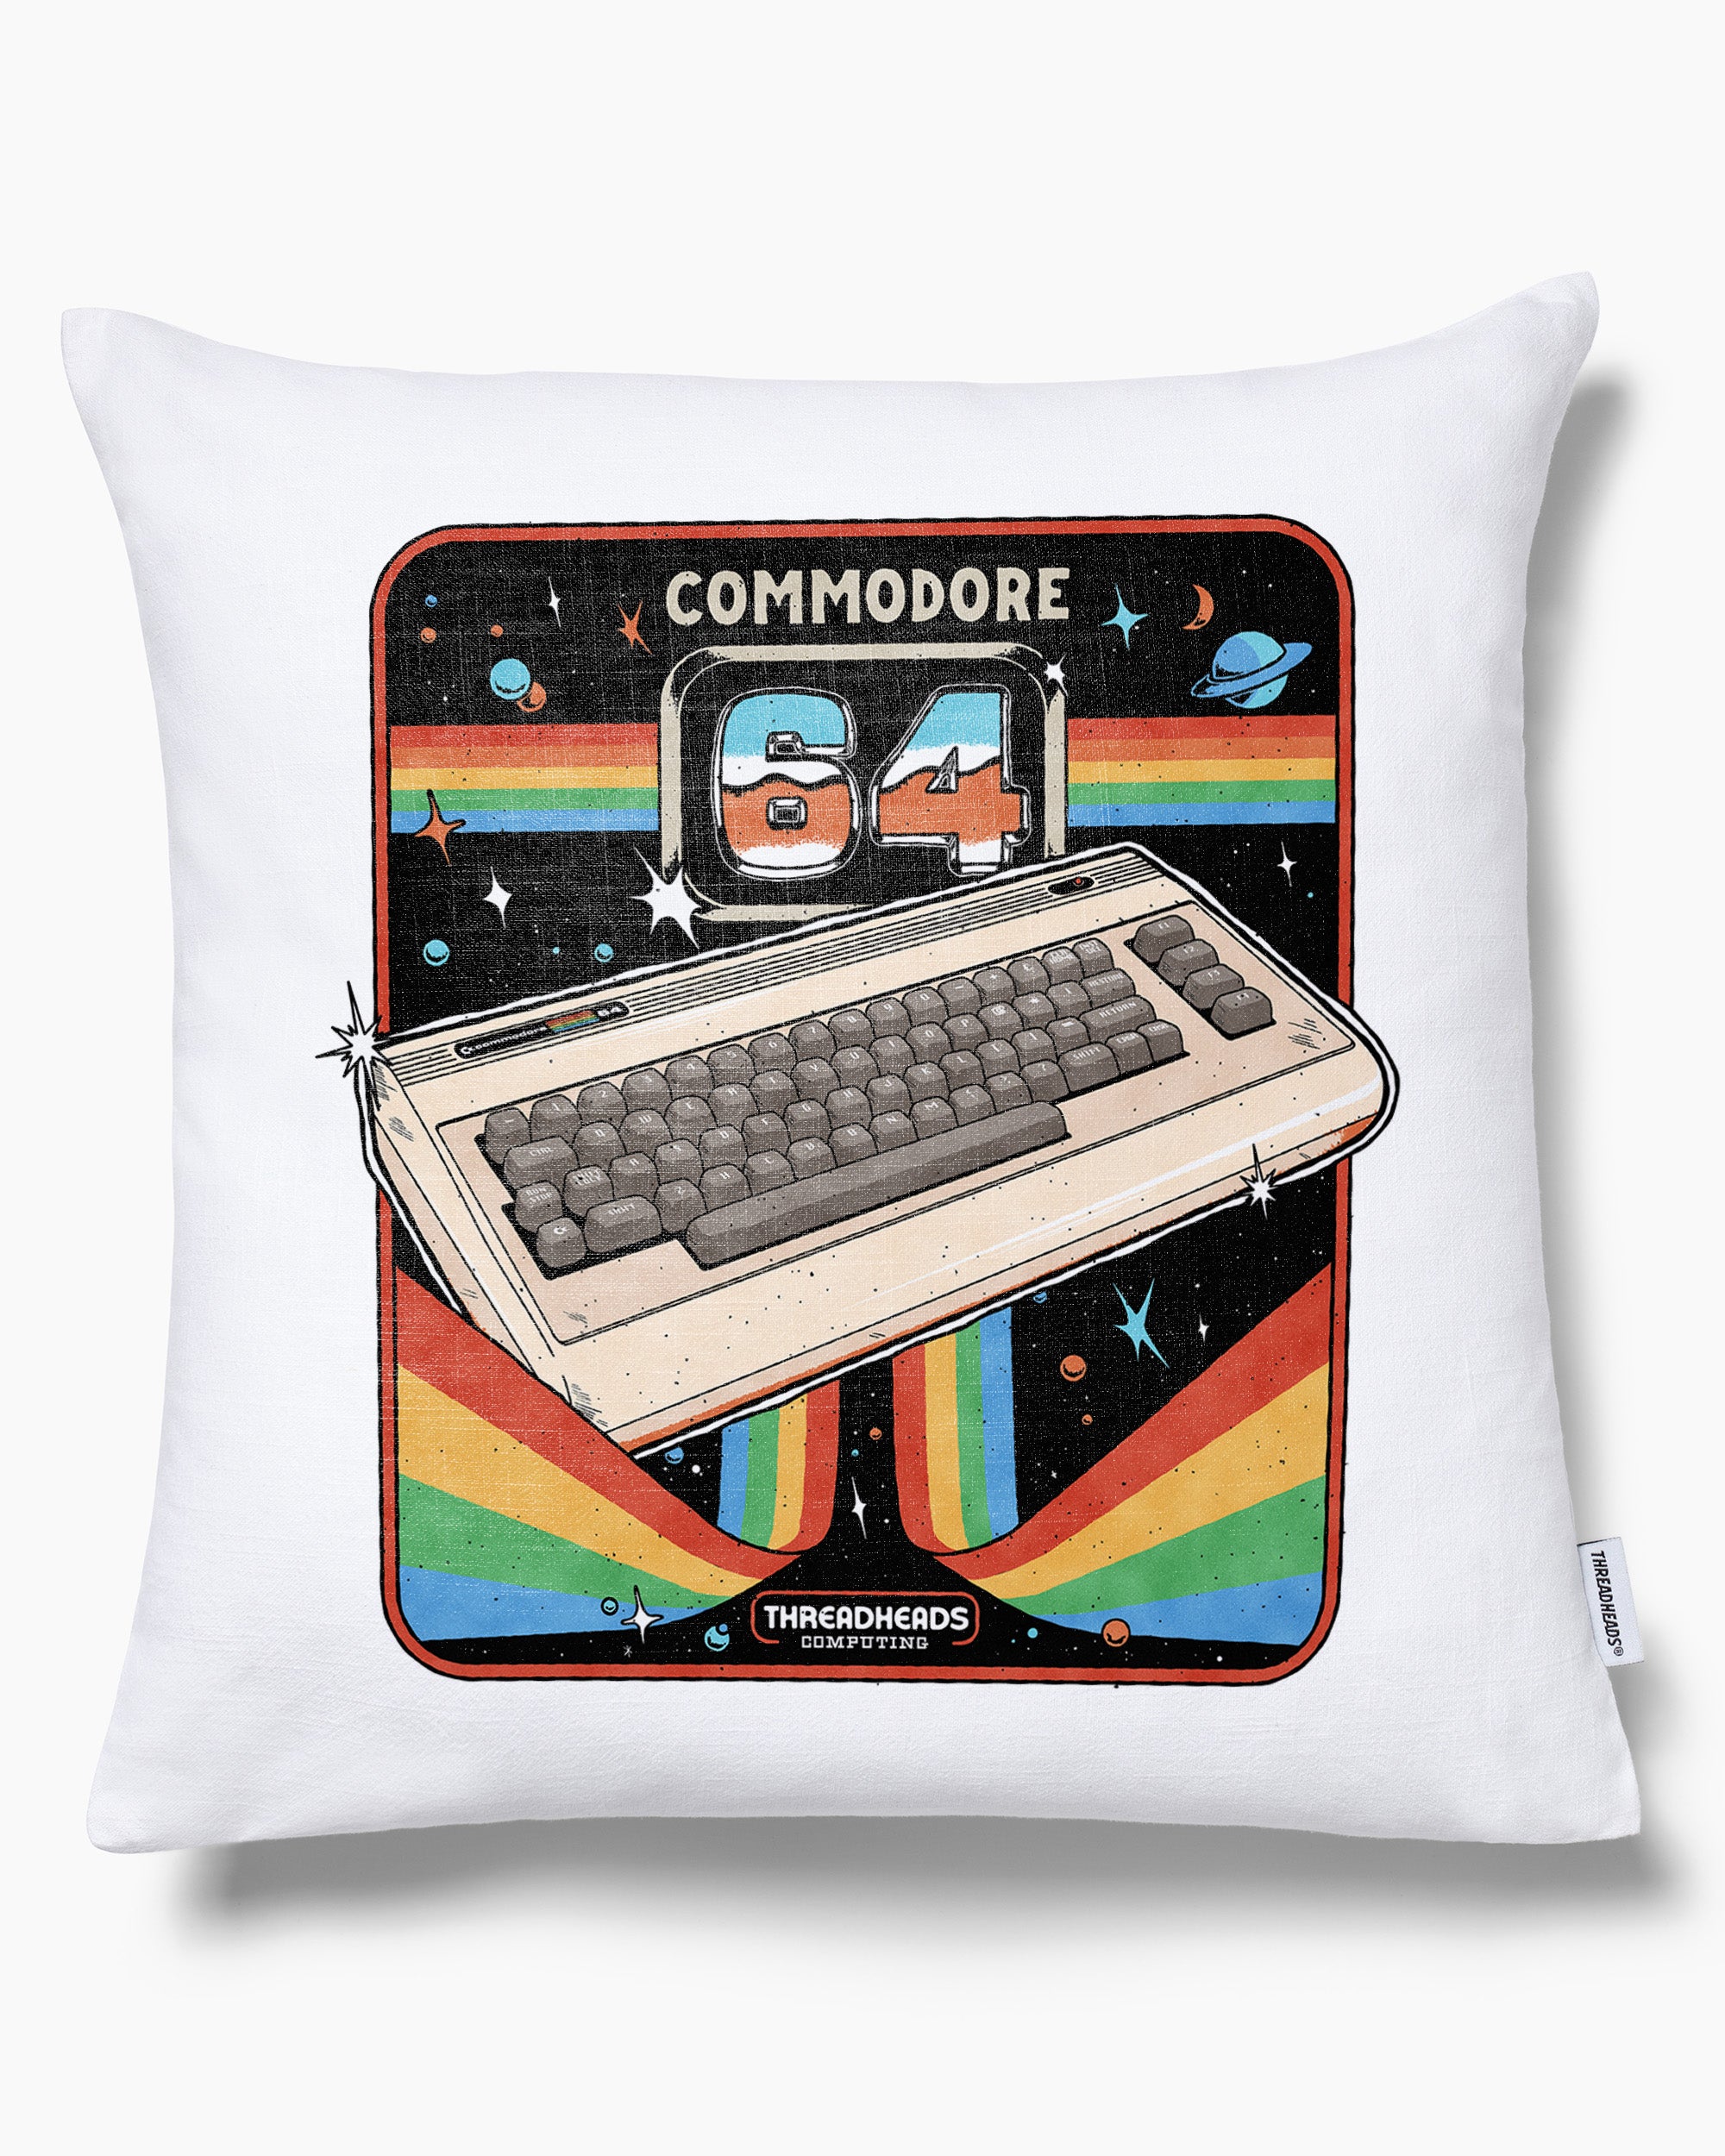 Commodore 64 Advanced Home Computer Cushion